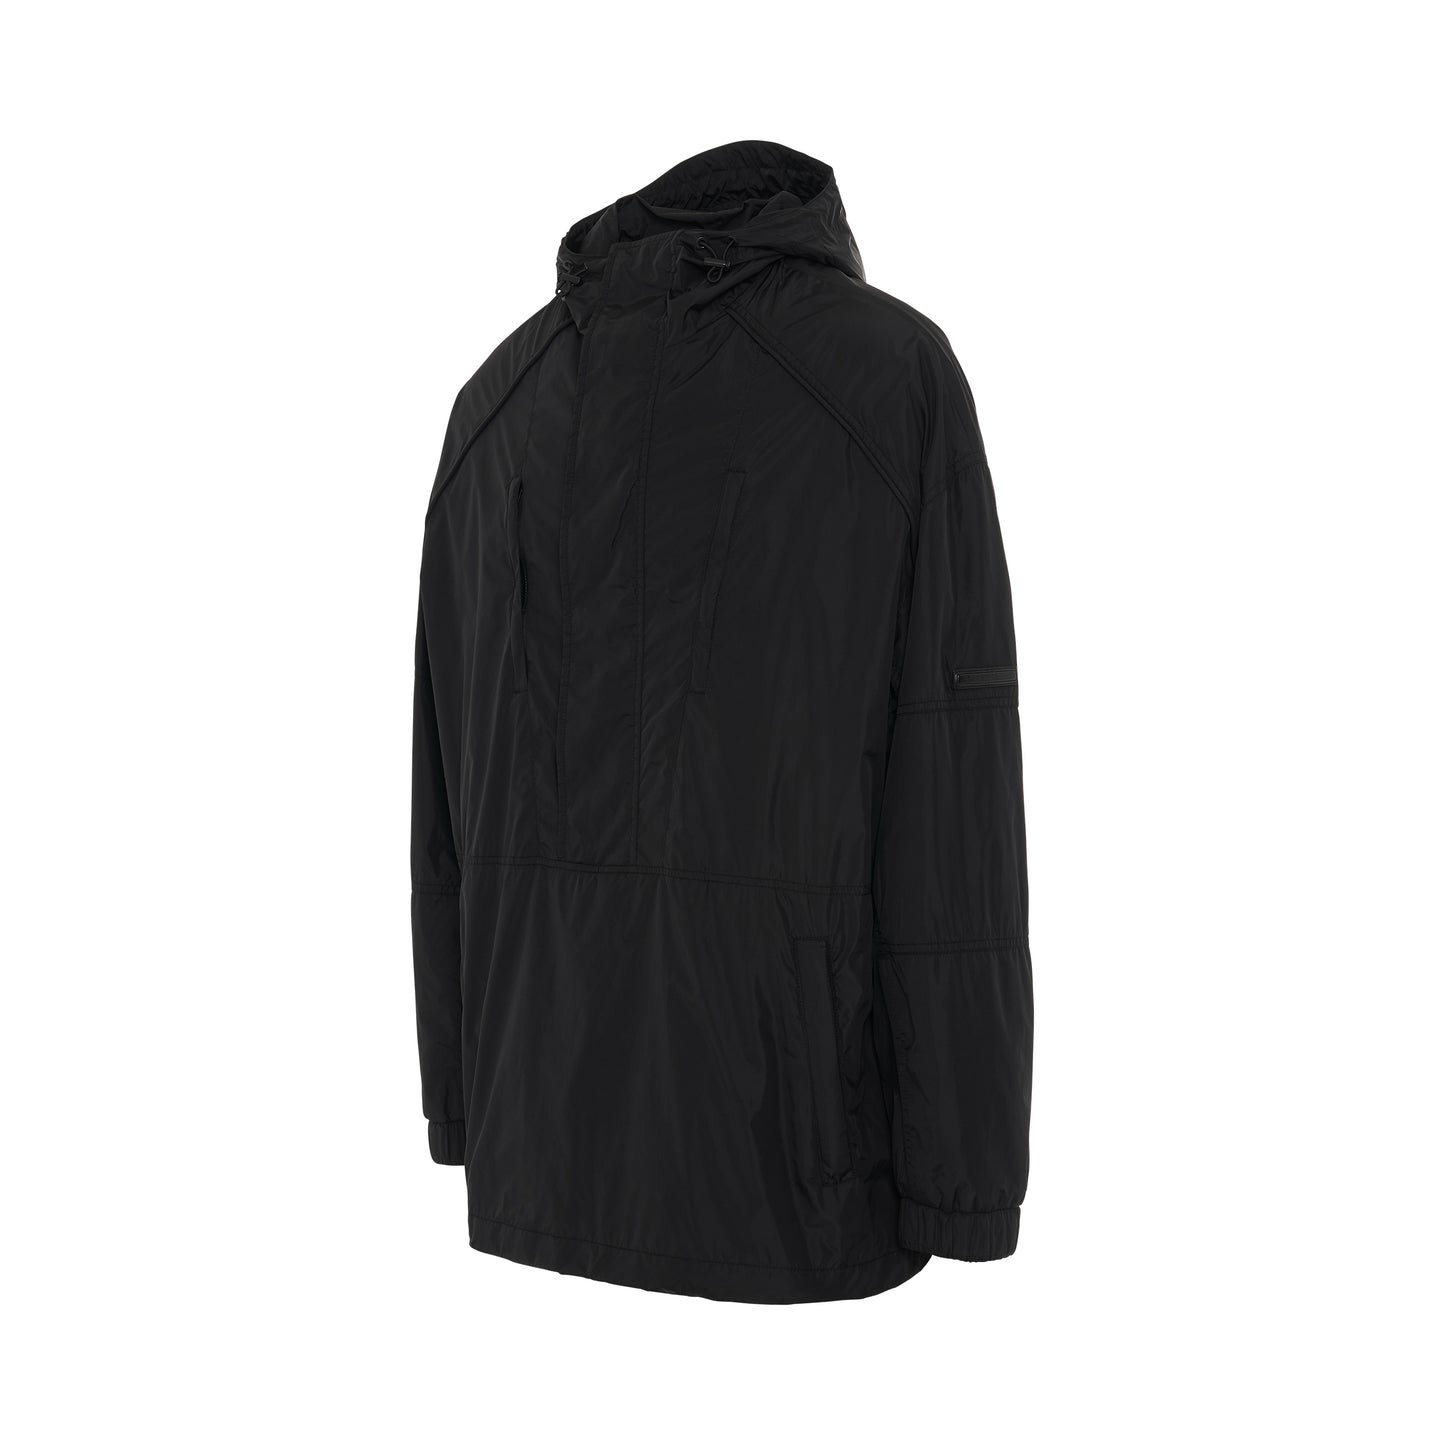 [T-Line] Hood Pull Over Anorak Jacket in Black